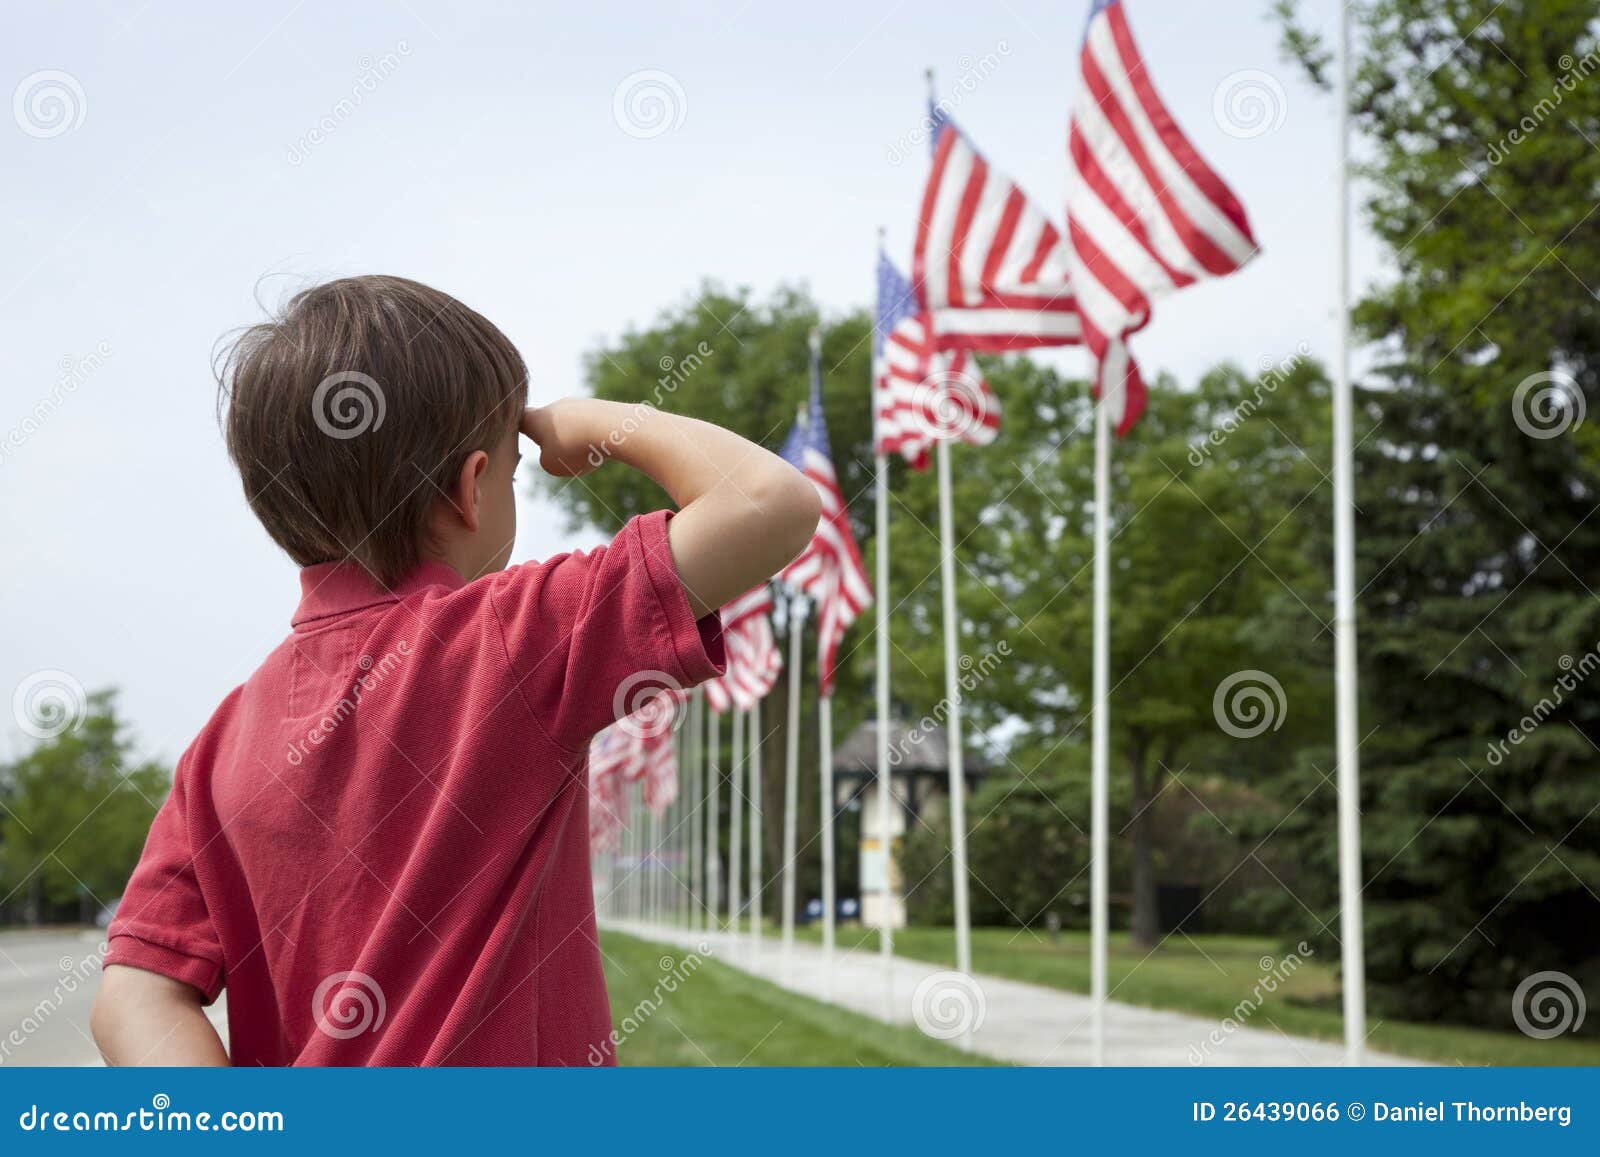 young-boy-saluting-american-flags-memorial-day-26439066.jpg